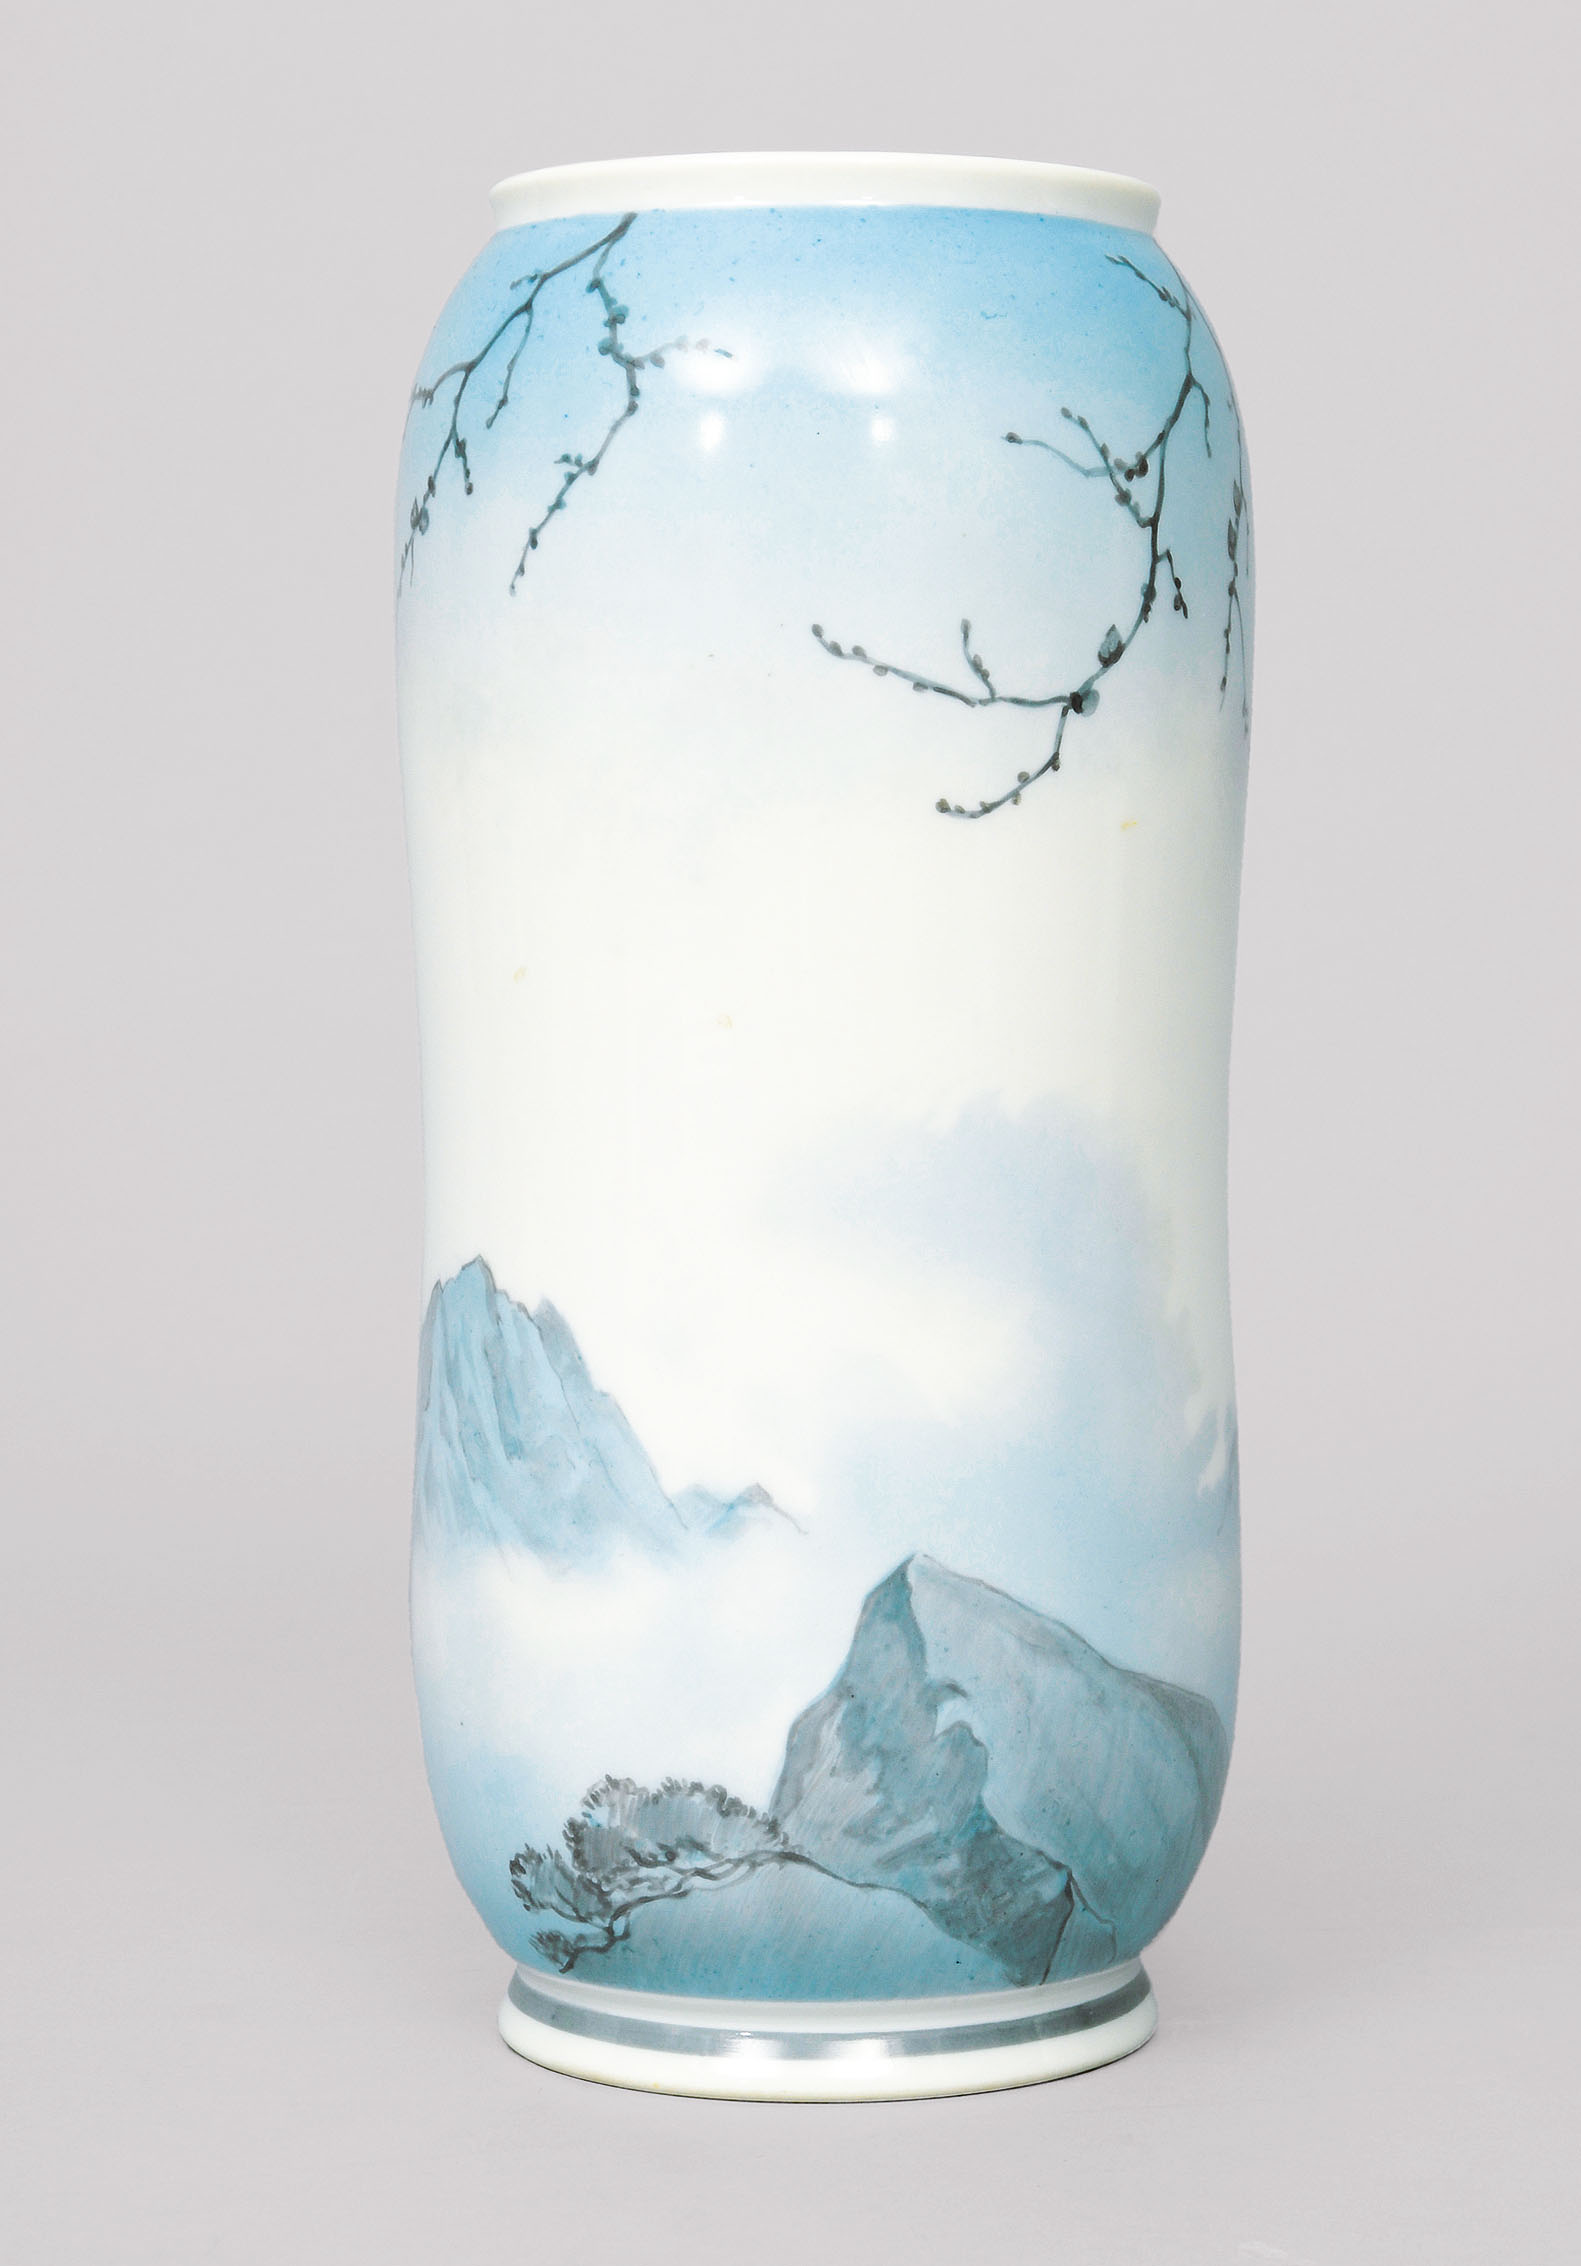 An Art-Nouveau vase with mountains